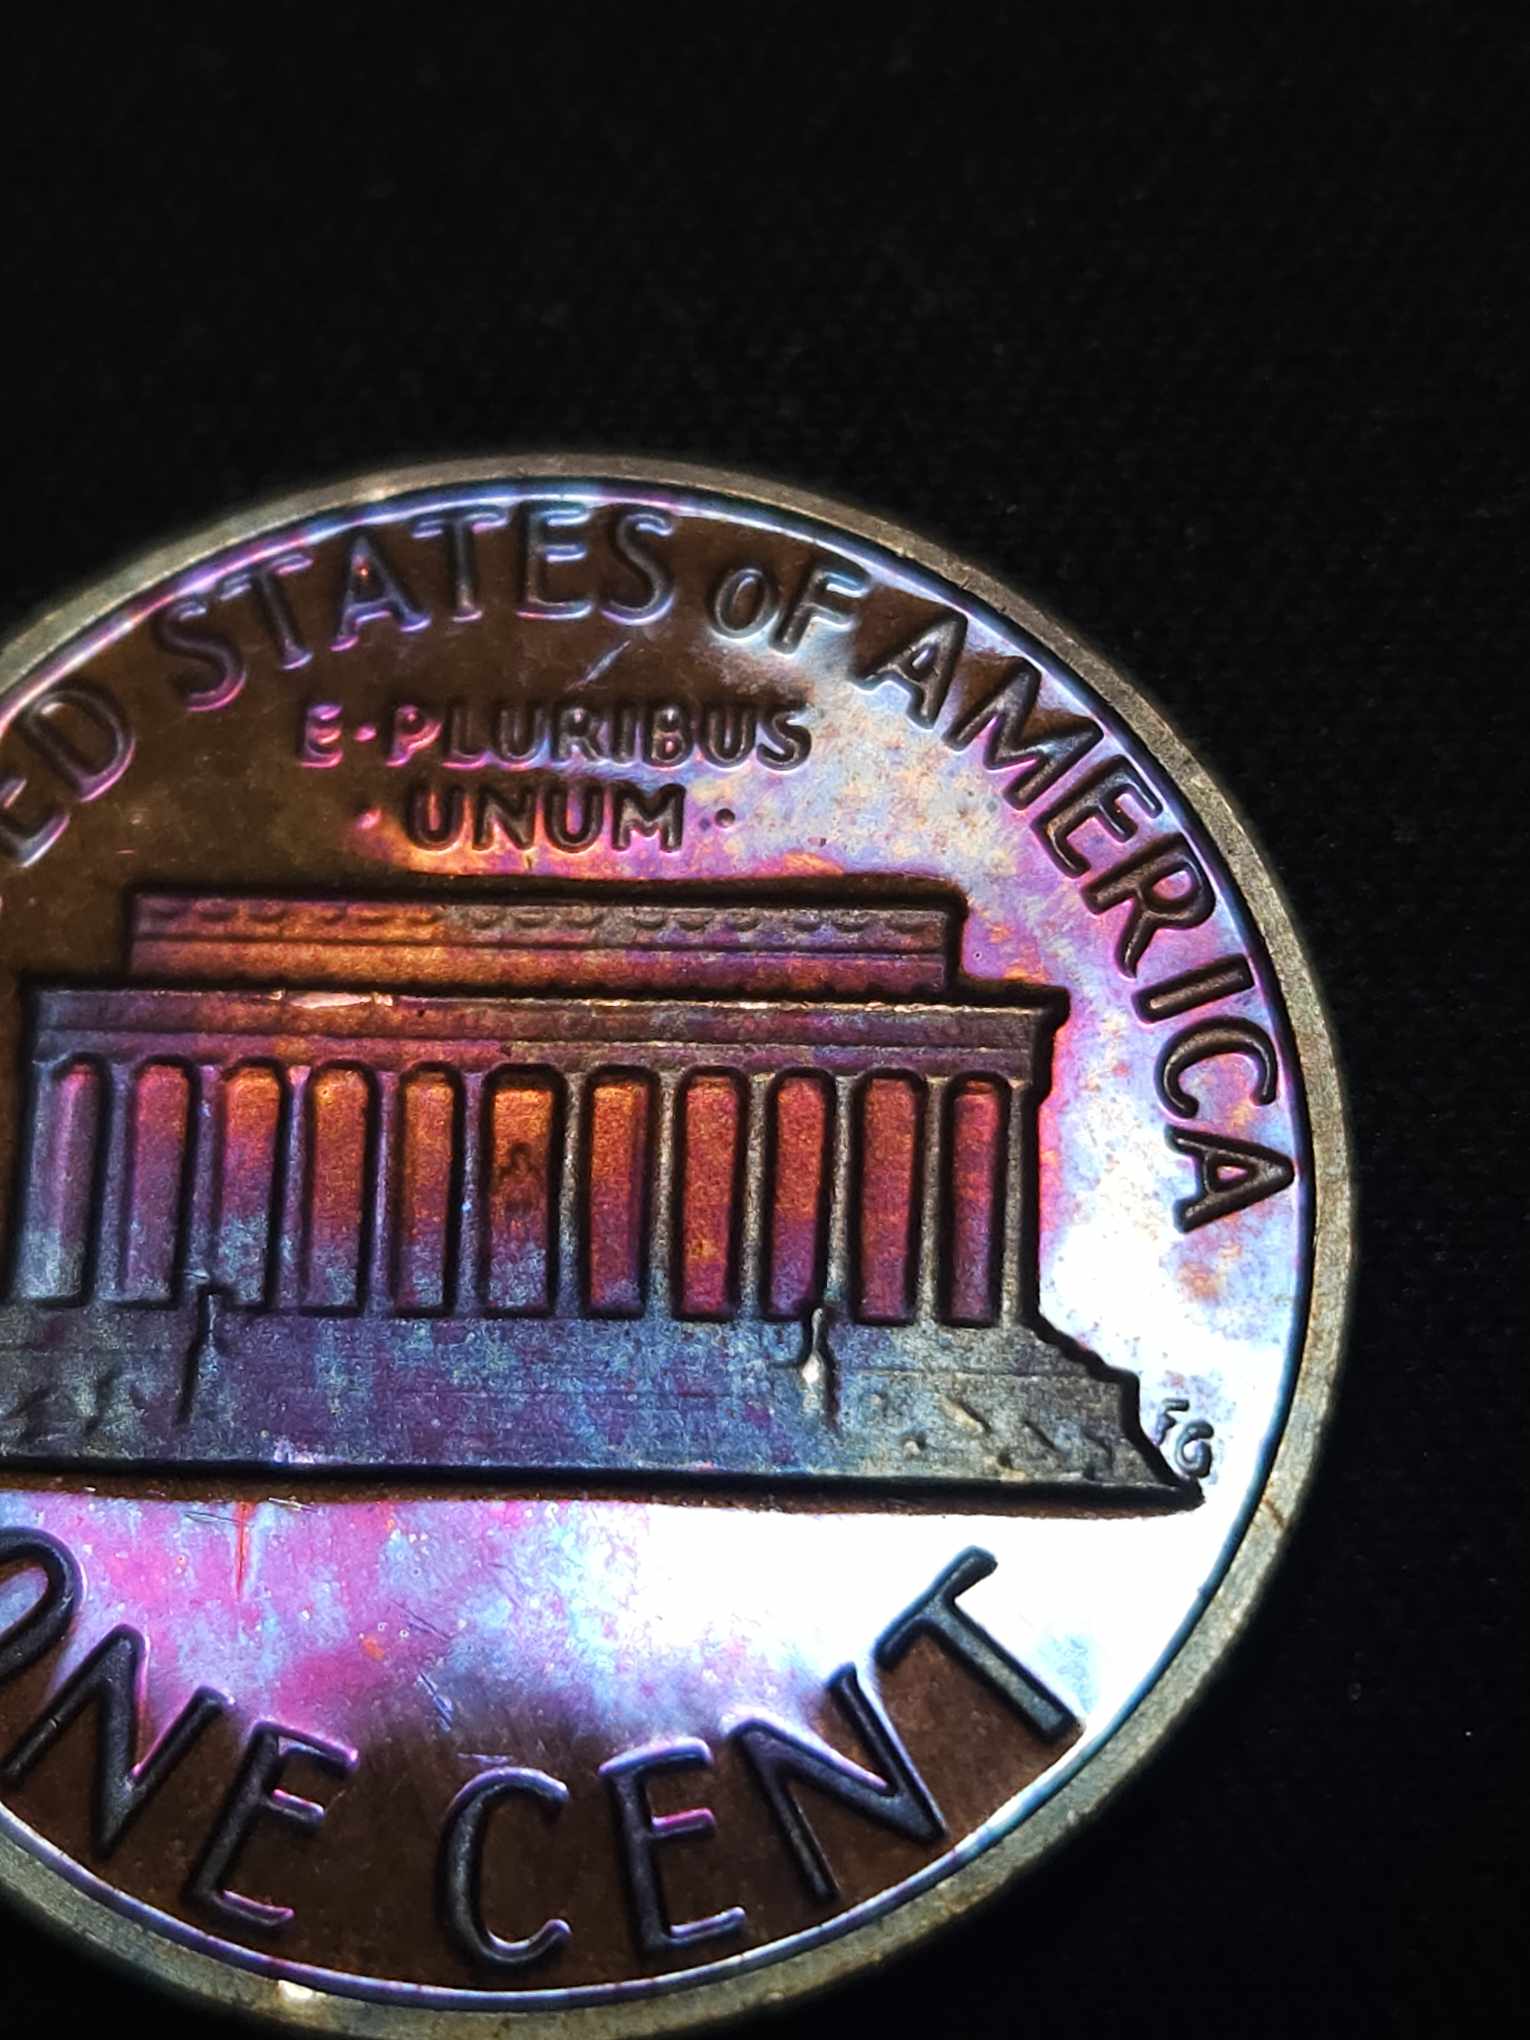 1981 S Lincoln Memorial Cent Proof Bu Errors & Oddities